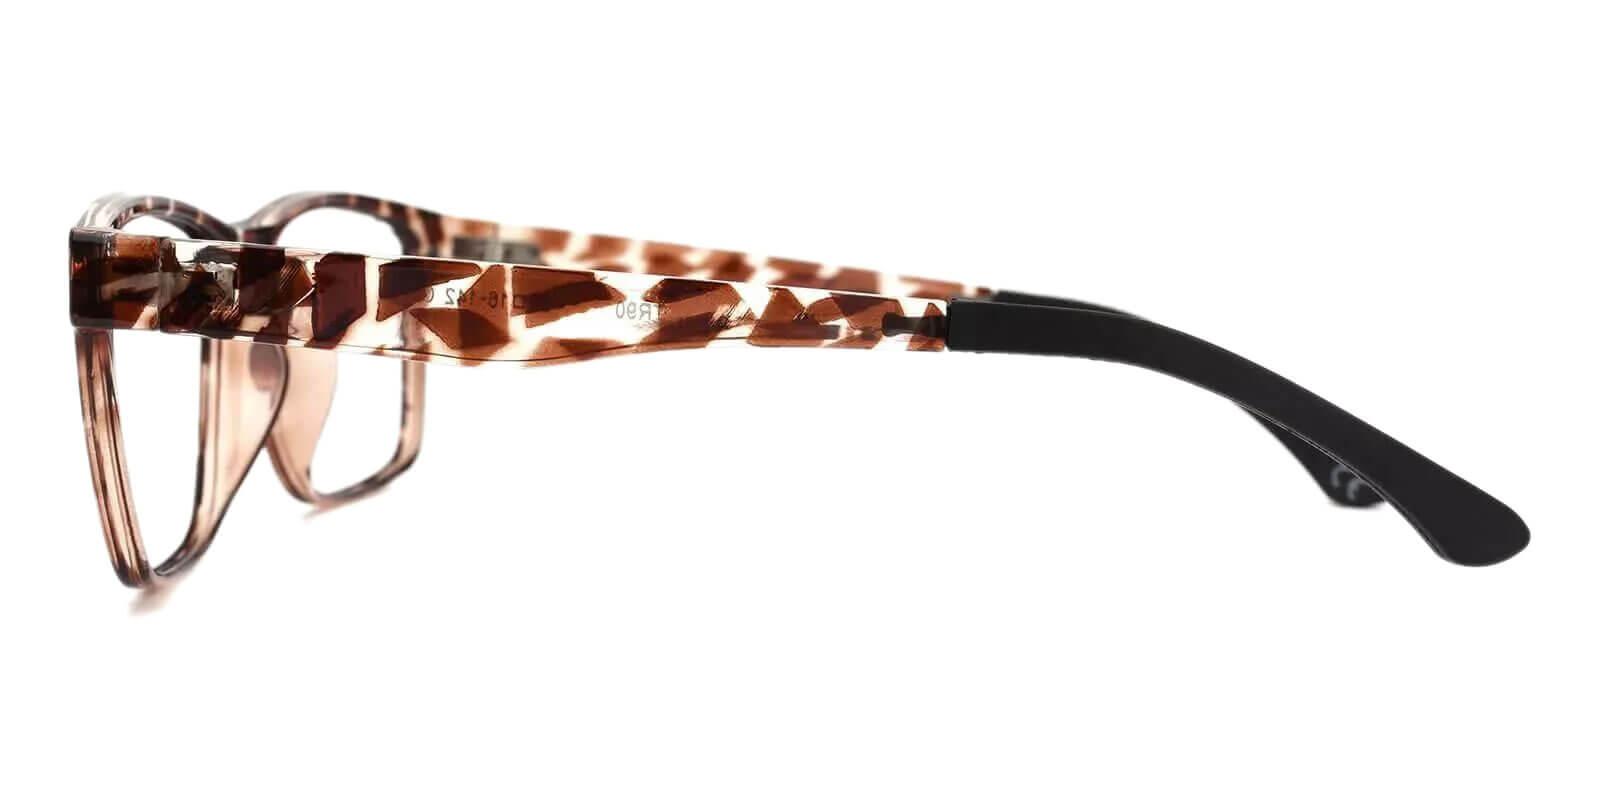 Austria Pattern Combination UniversalBridgeFit , Eyeglasses Frames from ABBE Glasses